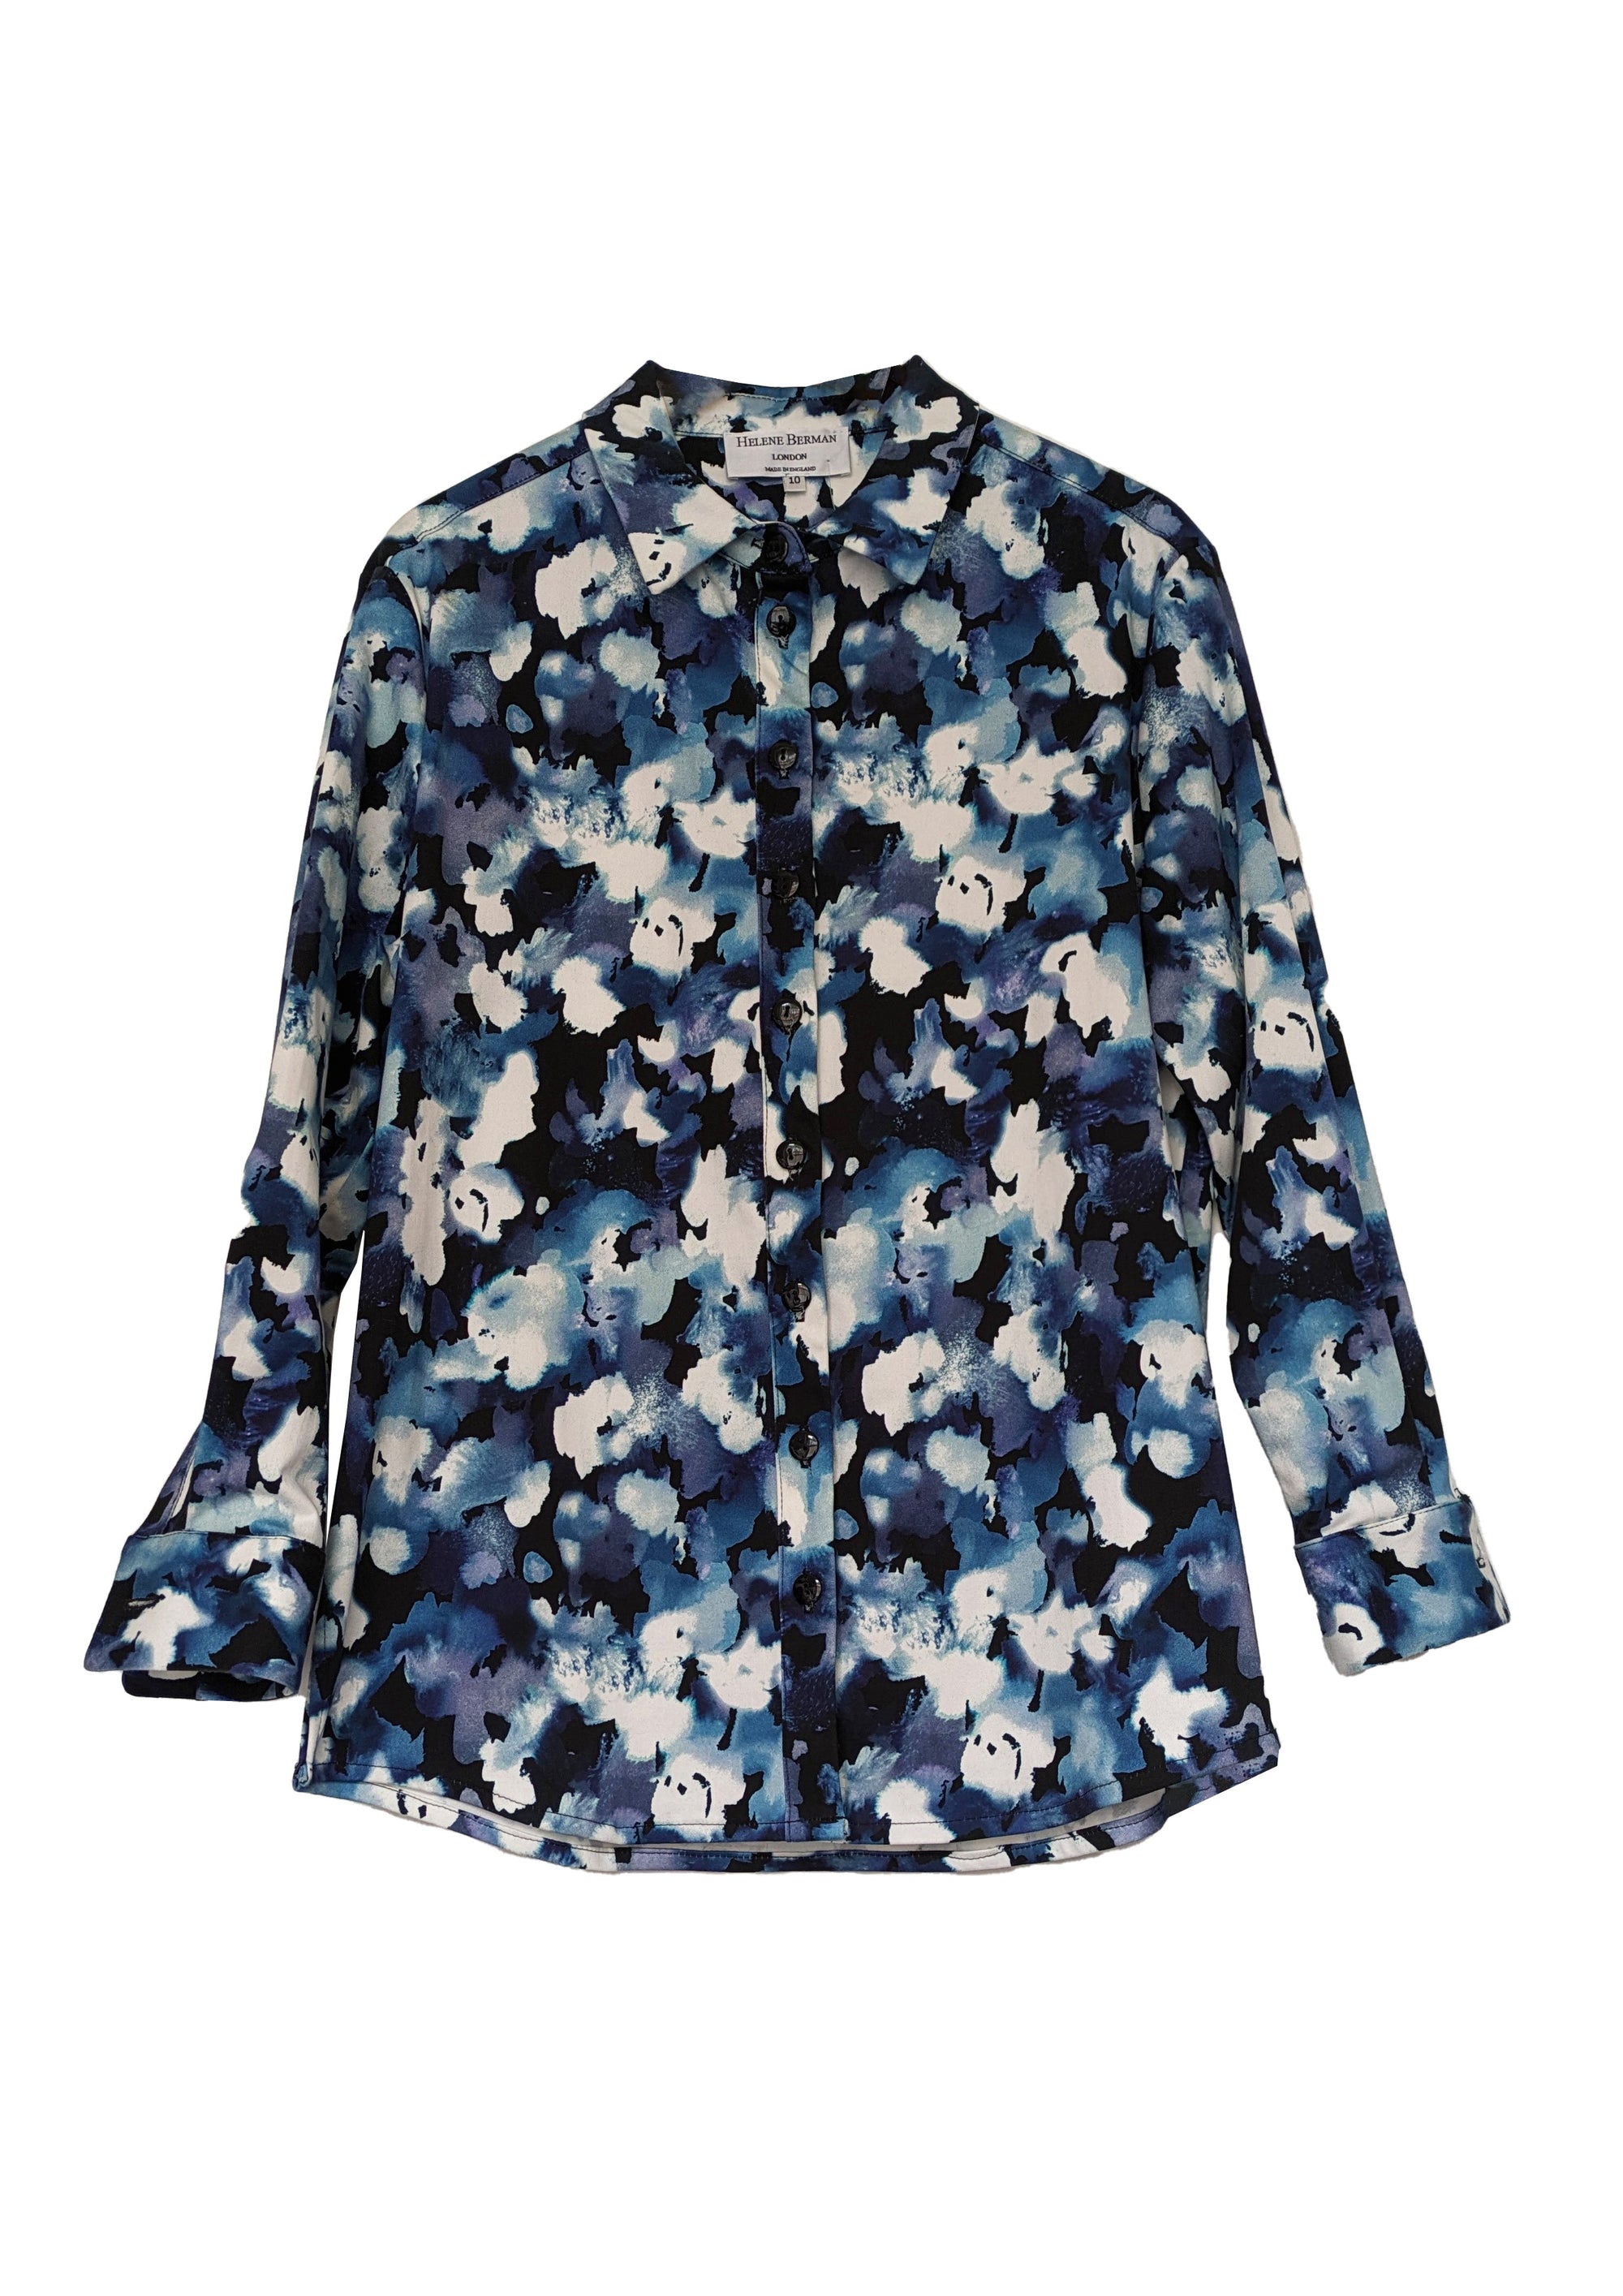 Blue abstract floral print shirt